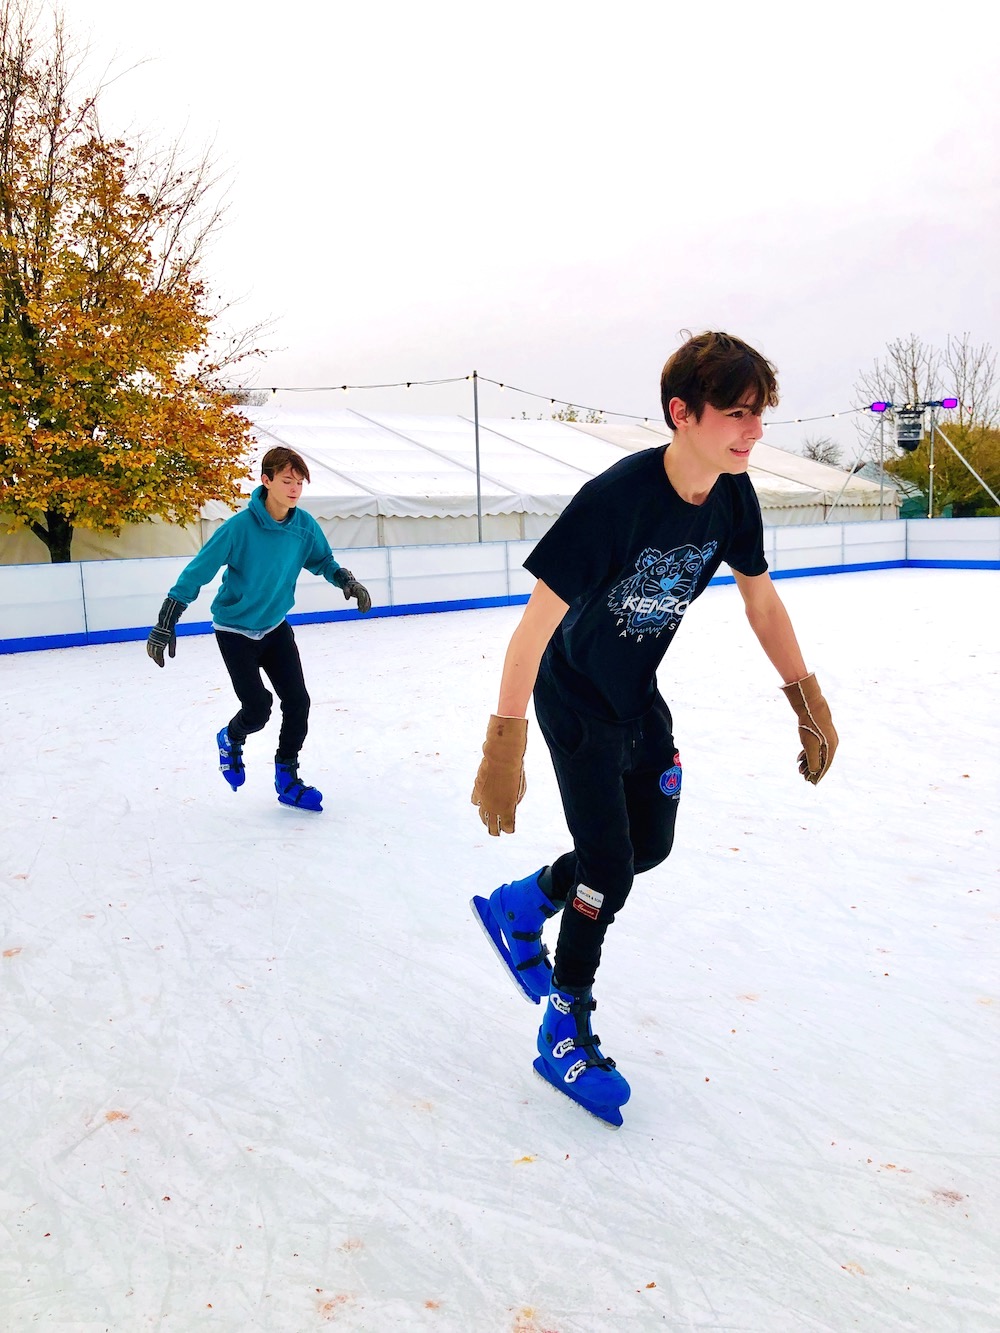 Two boys enjoying open air Christmas ice skating at Avon Valley, Bristol